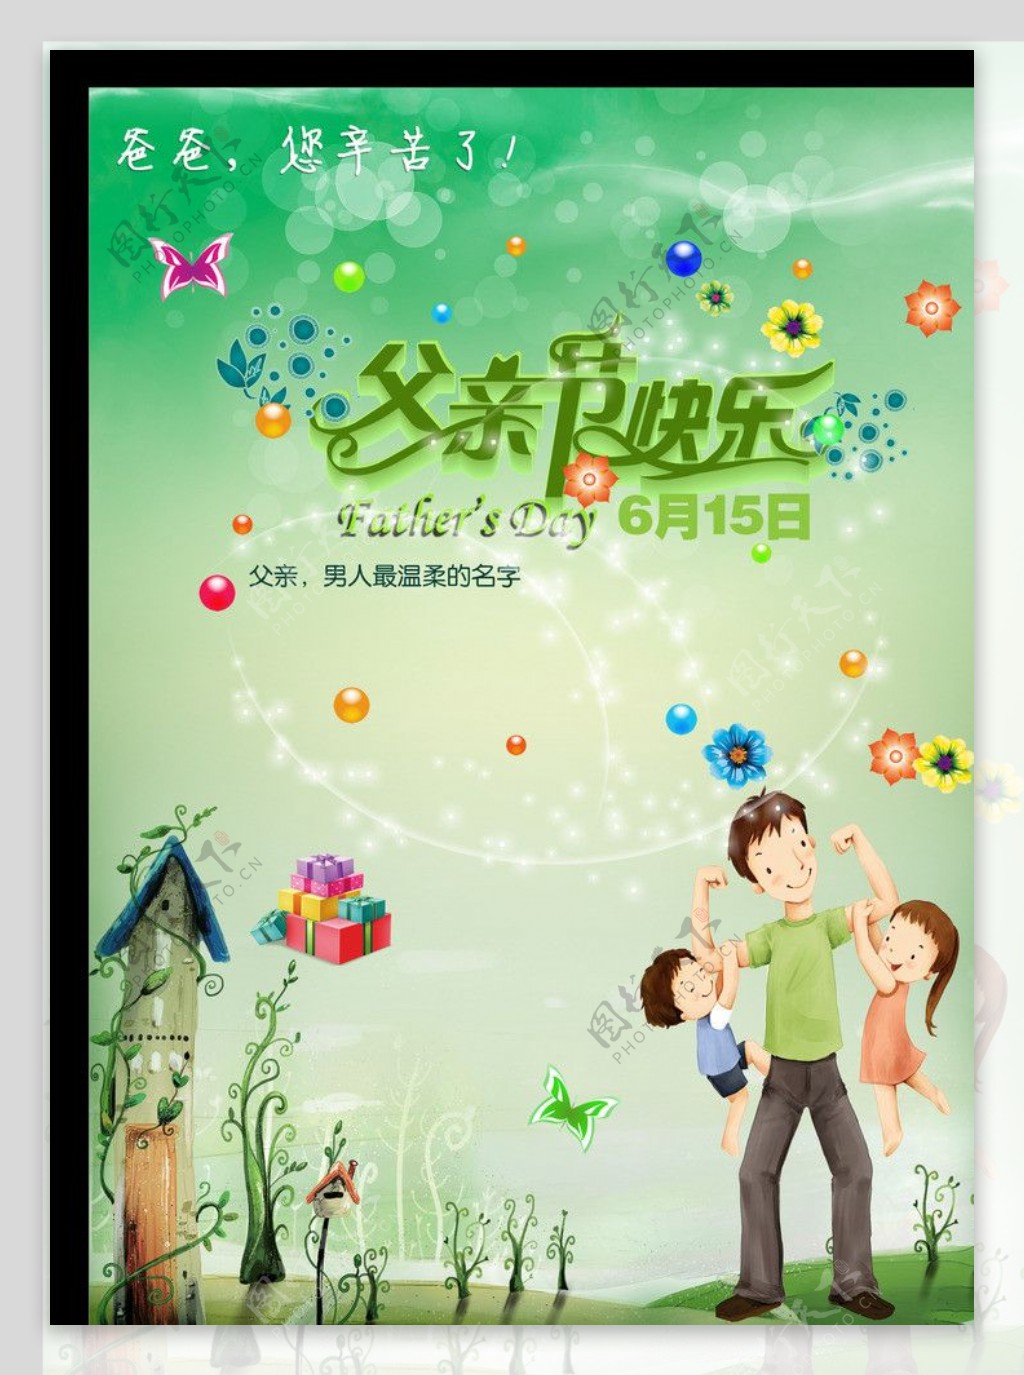 PPT模板-素材下载-图创网父亲节快乐 父亲和孩子玩耍背景海报设计-PPT模板-图创网